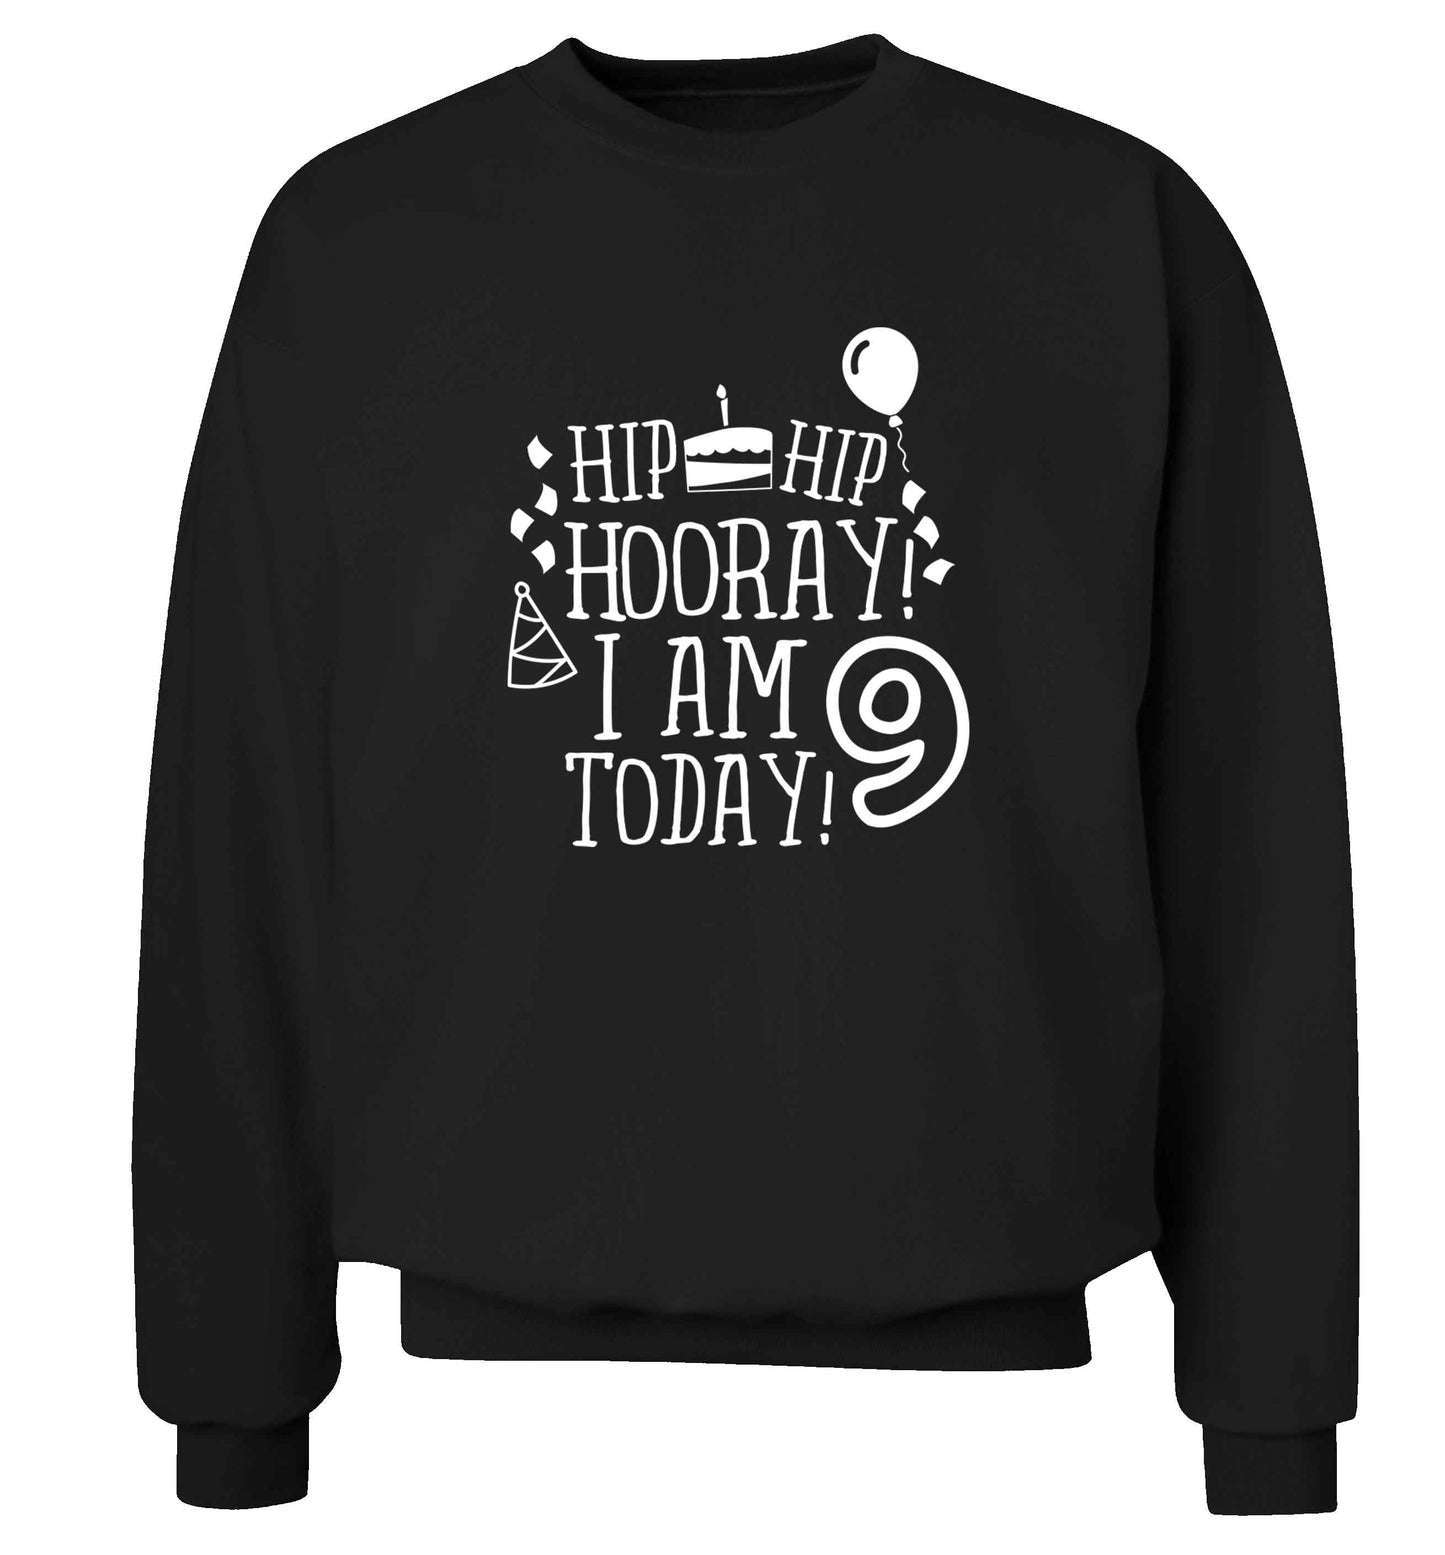 Hip hip hooray I am 9 today! adult's unisex black sweater 2XL